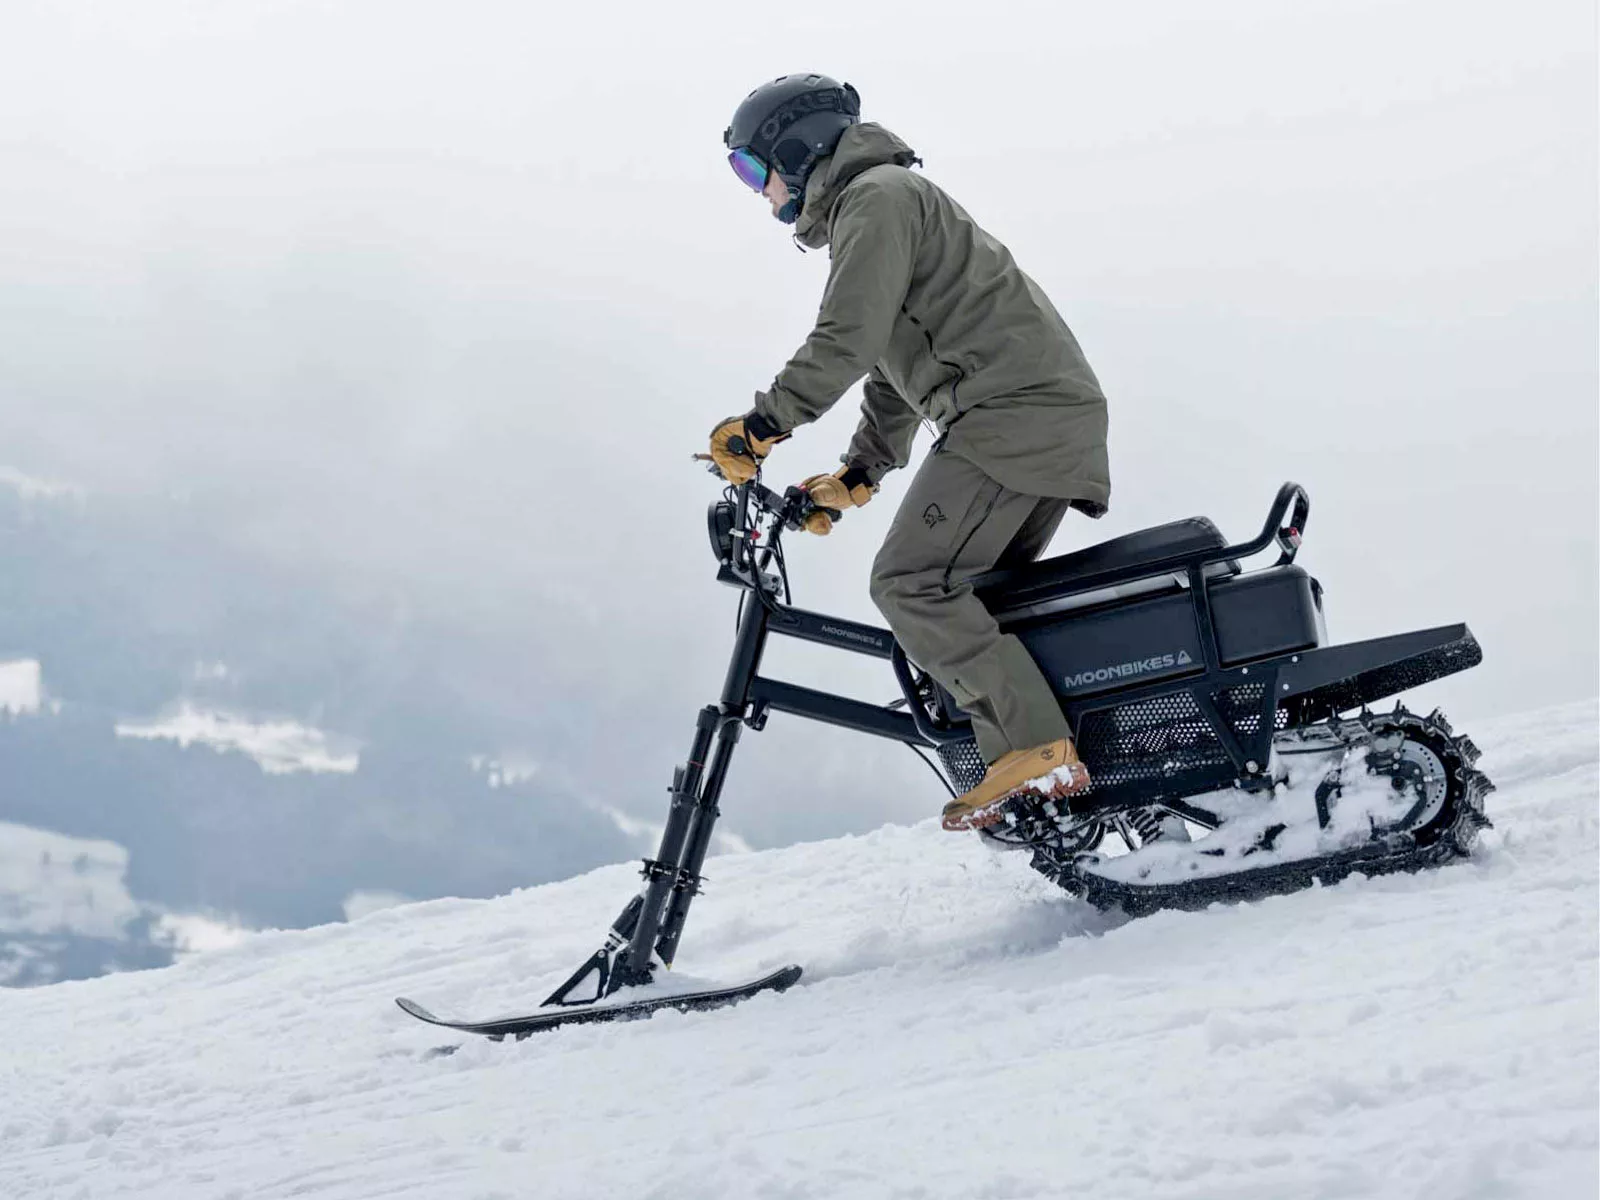 MoonBikes Snowbike lightweight electric snowmobile